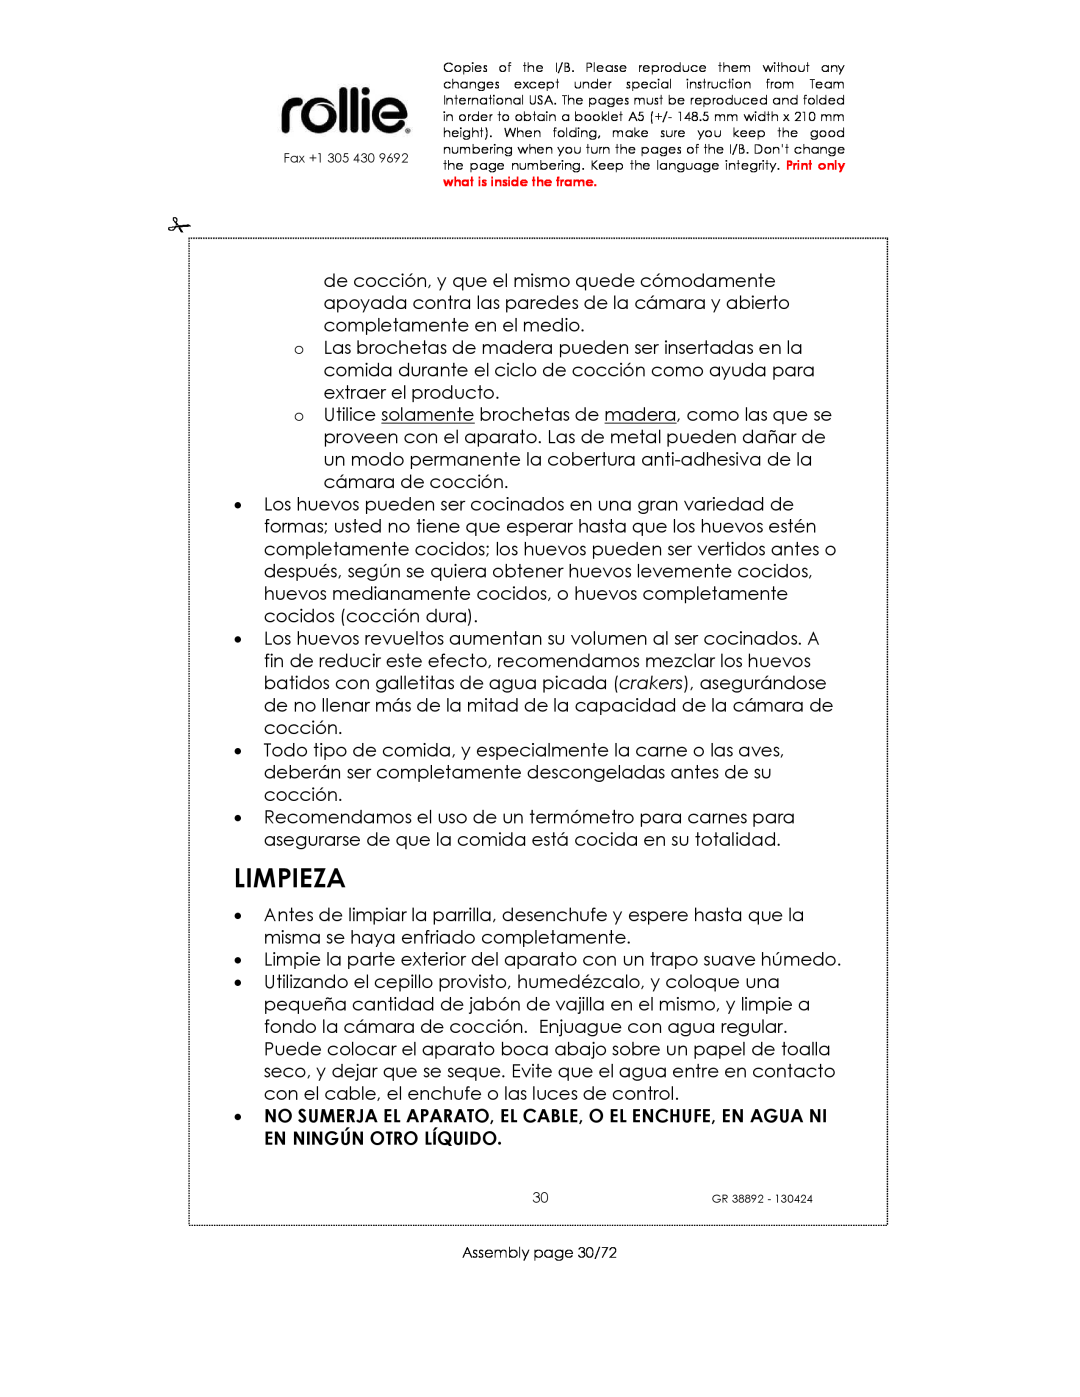 Kalorik GR38892 manual Limpieza, Assembly page 30/72 